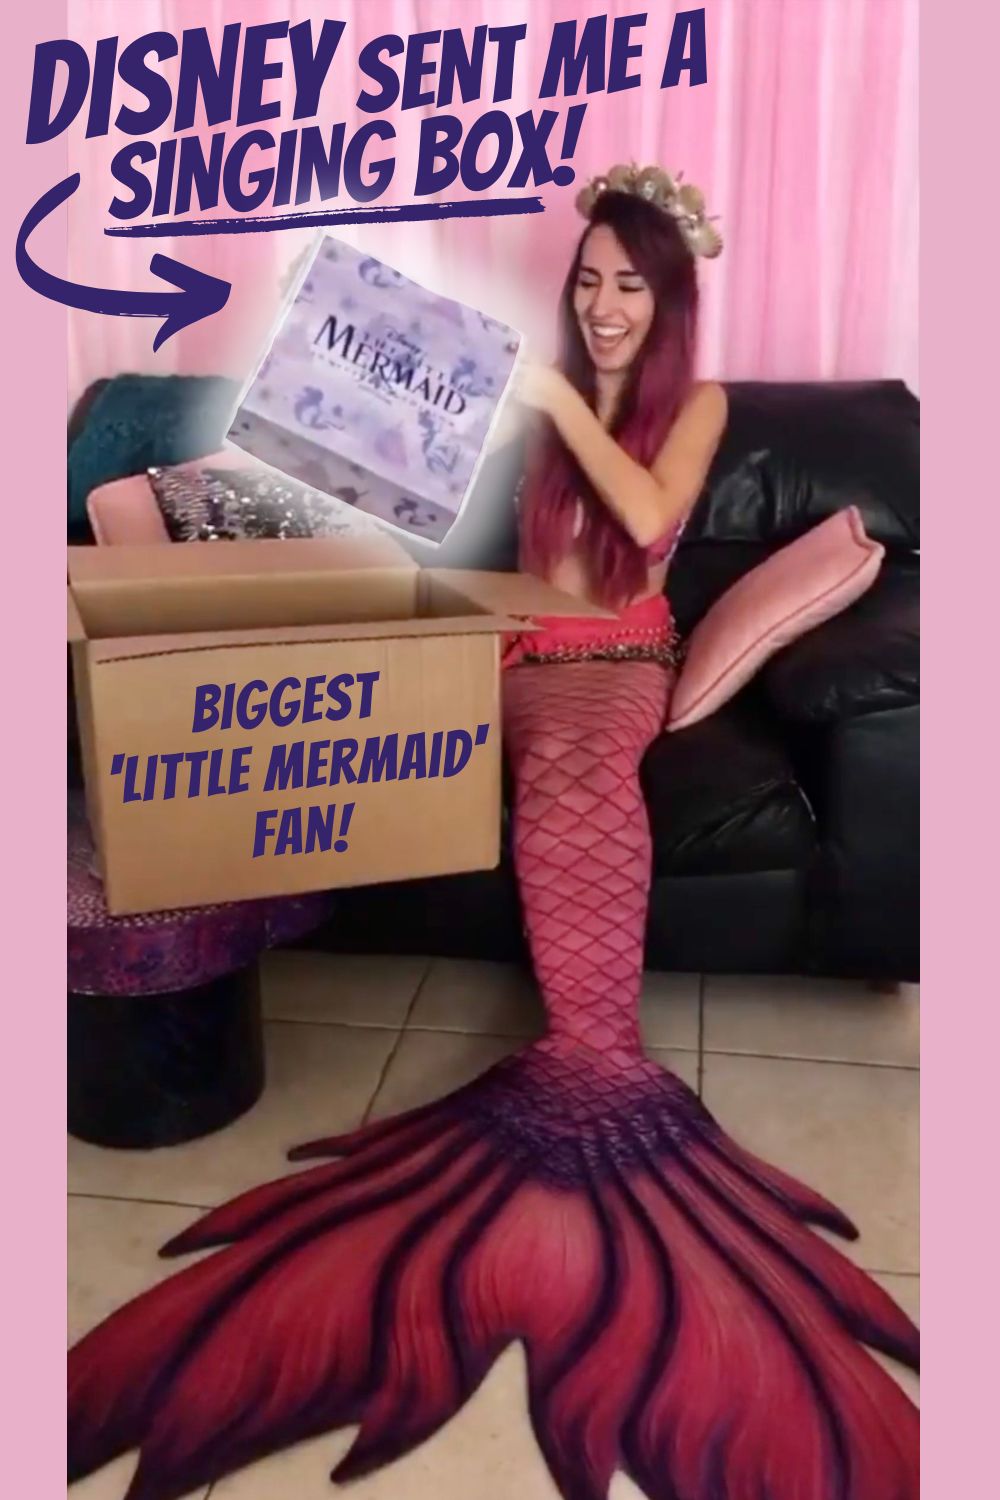 Disney sent me a singing box - The Little Mermaid Live unboxing video!